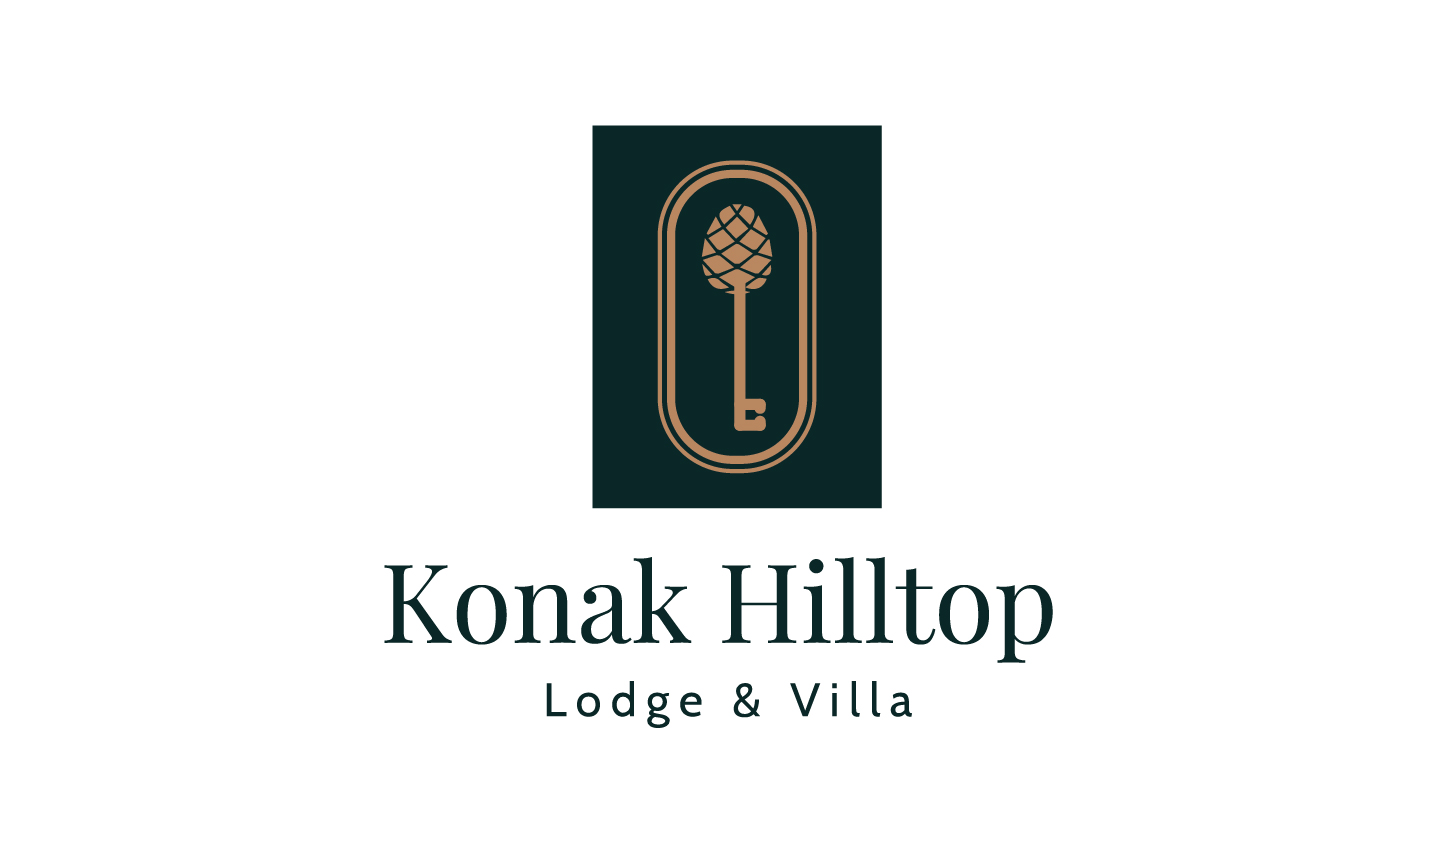 On Top Apartments & Konak Hilltop Lodge and villa